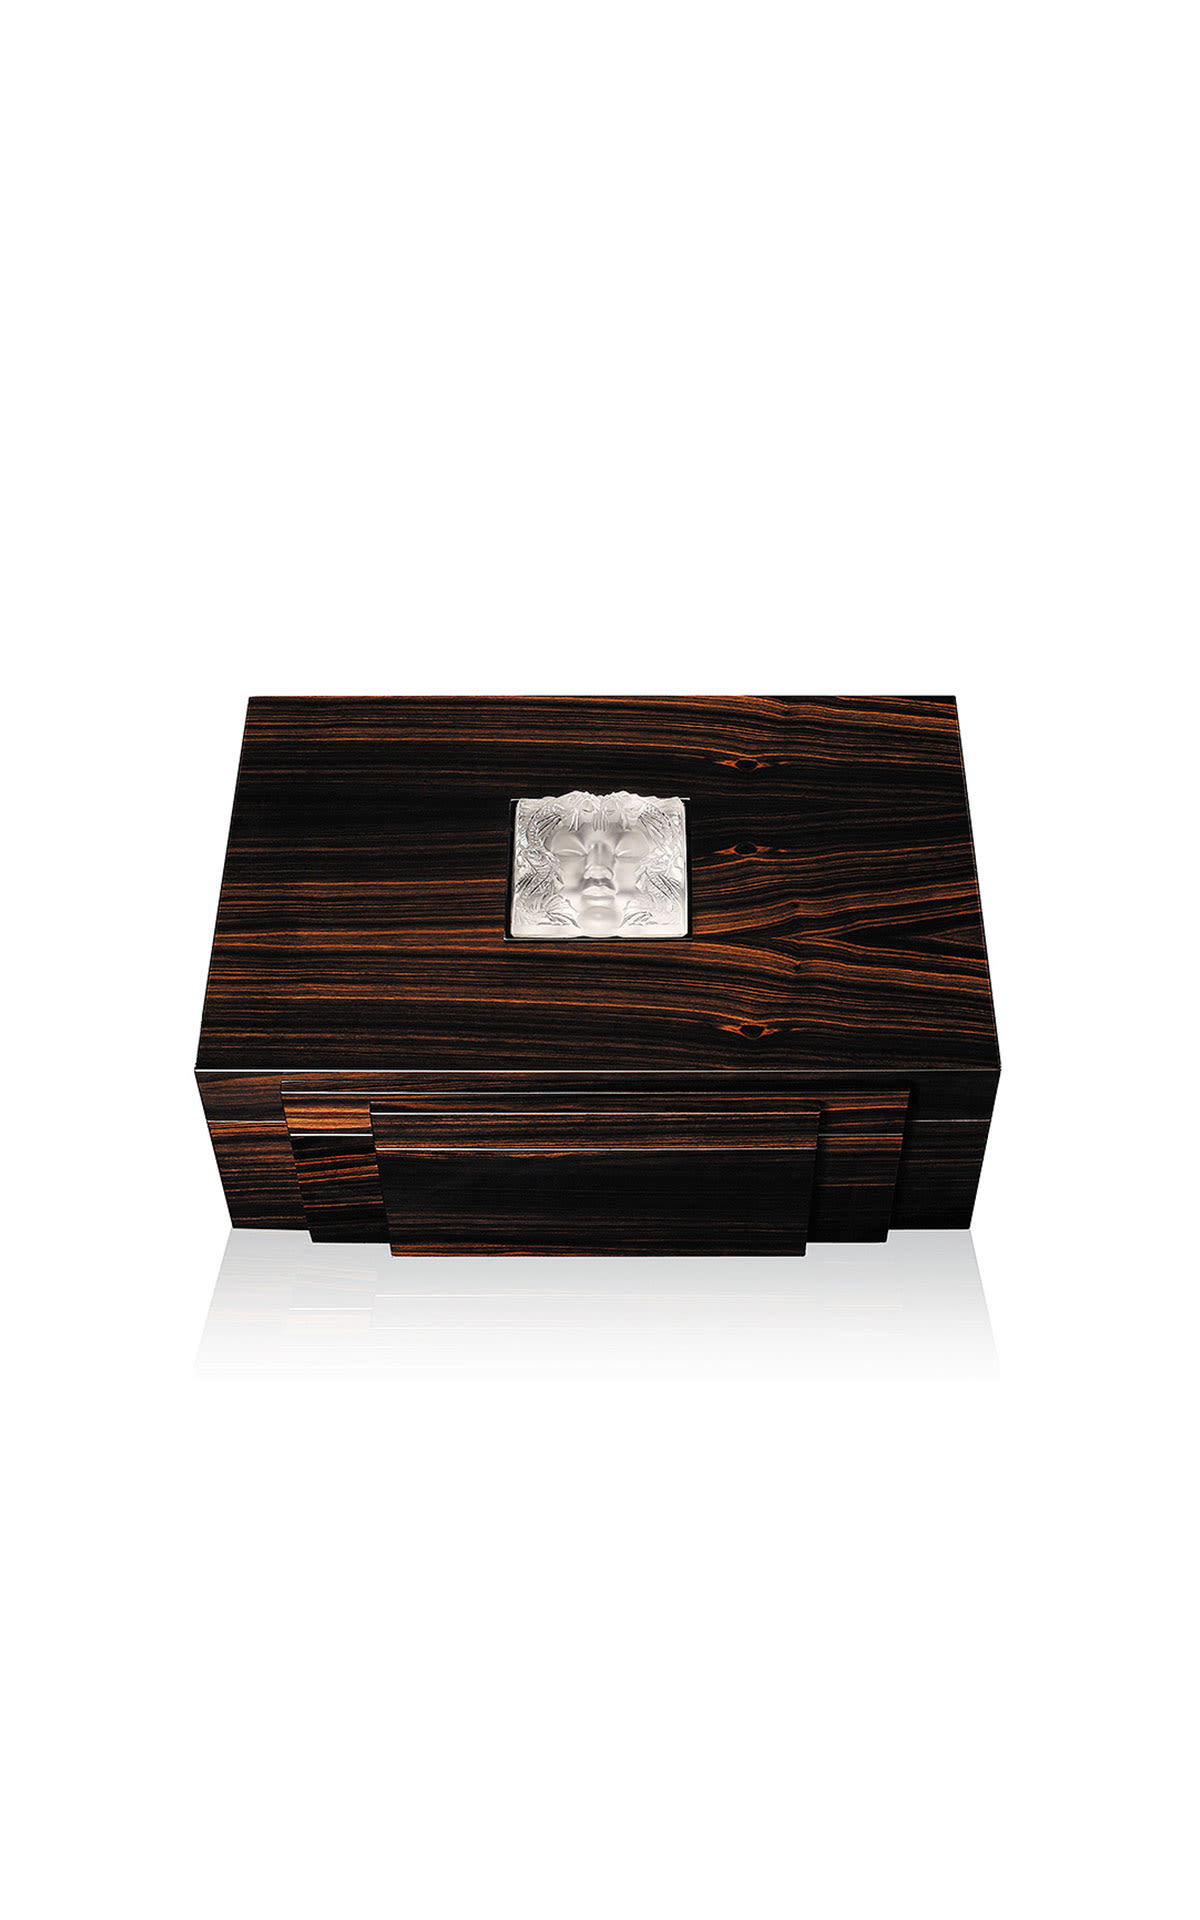 Lalique Masque de femme cigars ebony box  from Bicester Village